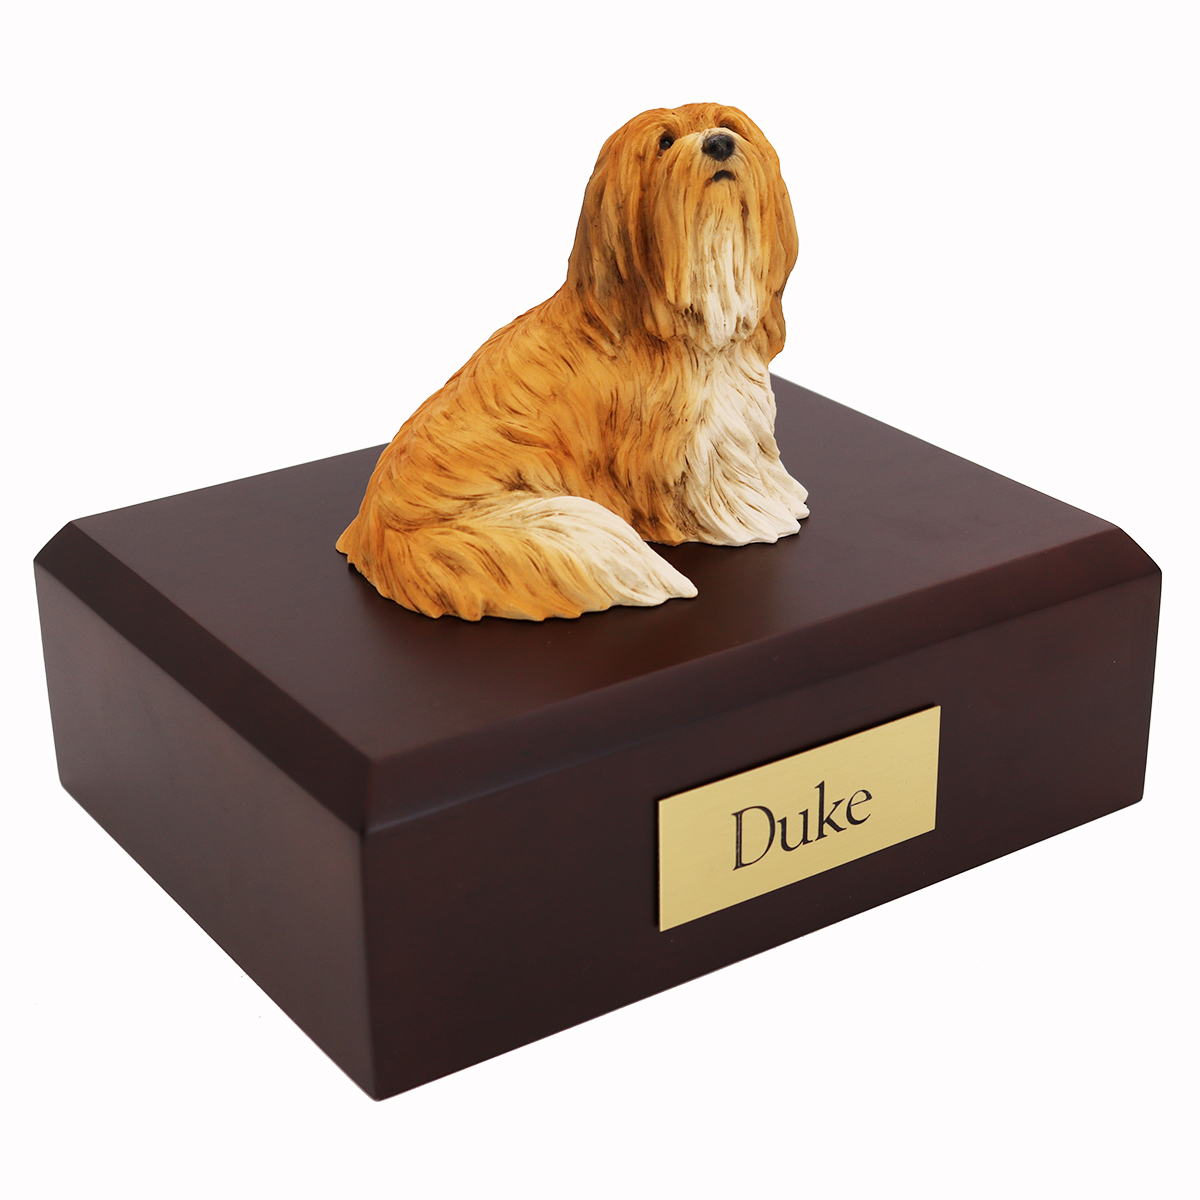 Dog, Lhasa Apso - Figurine Urn